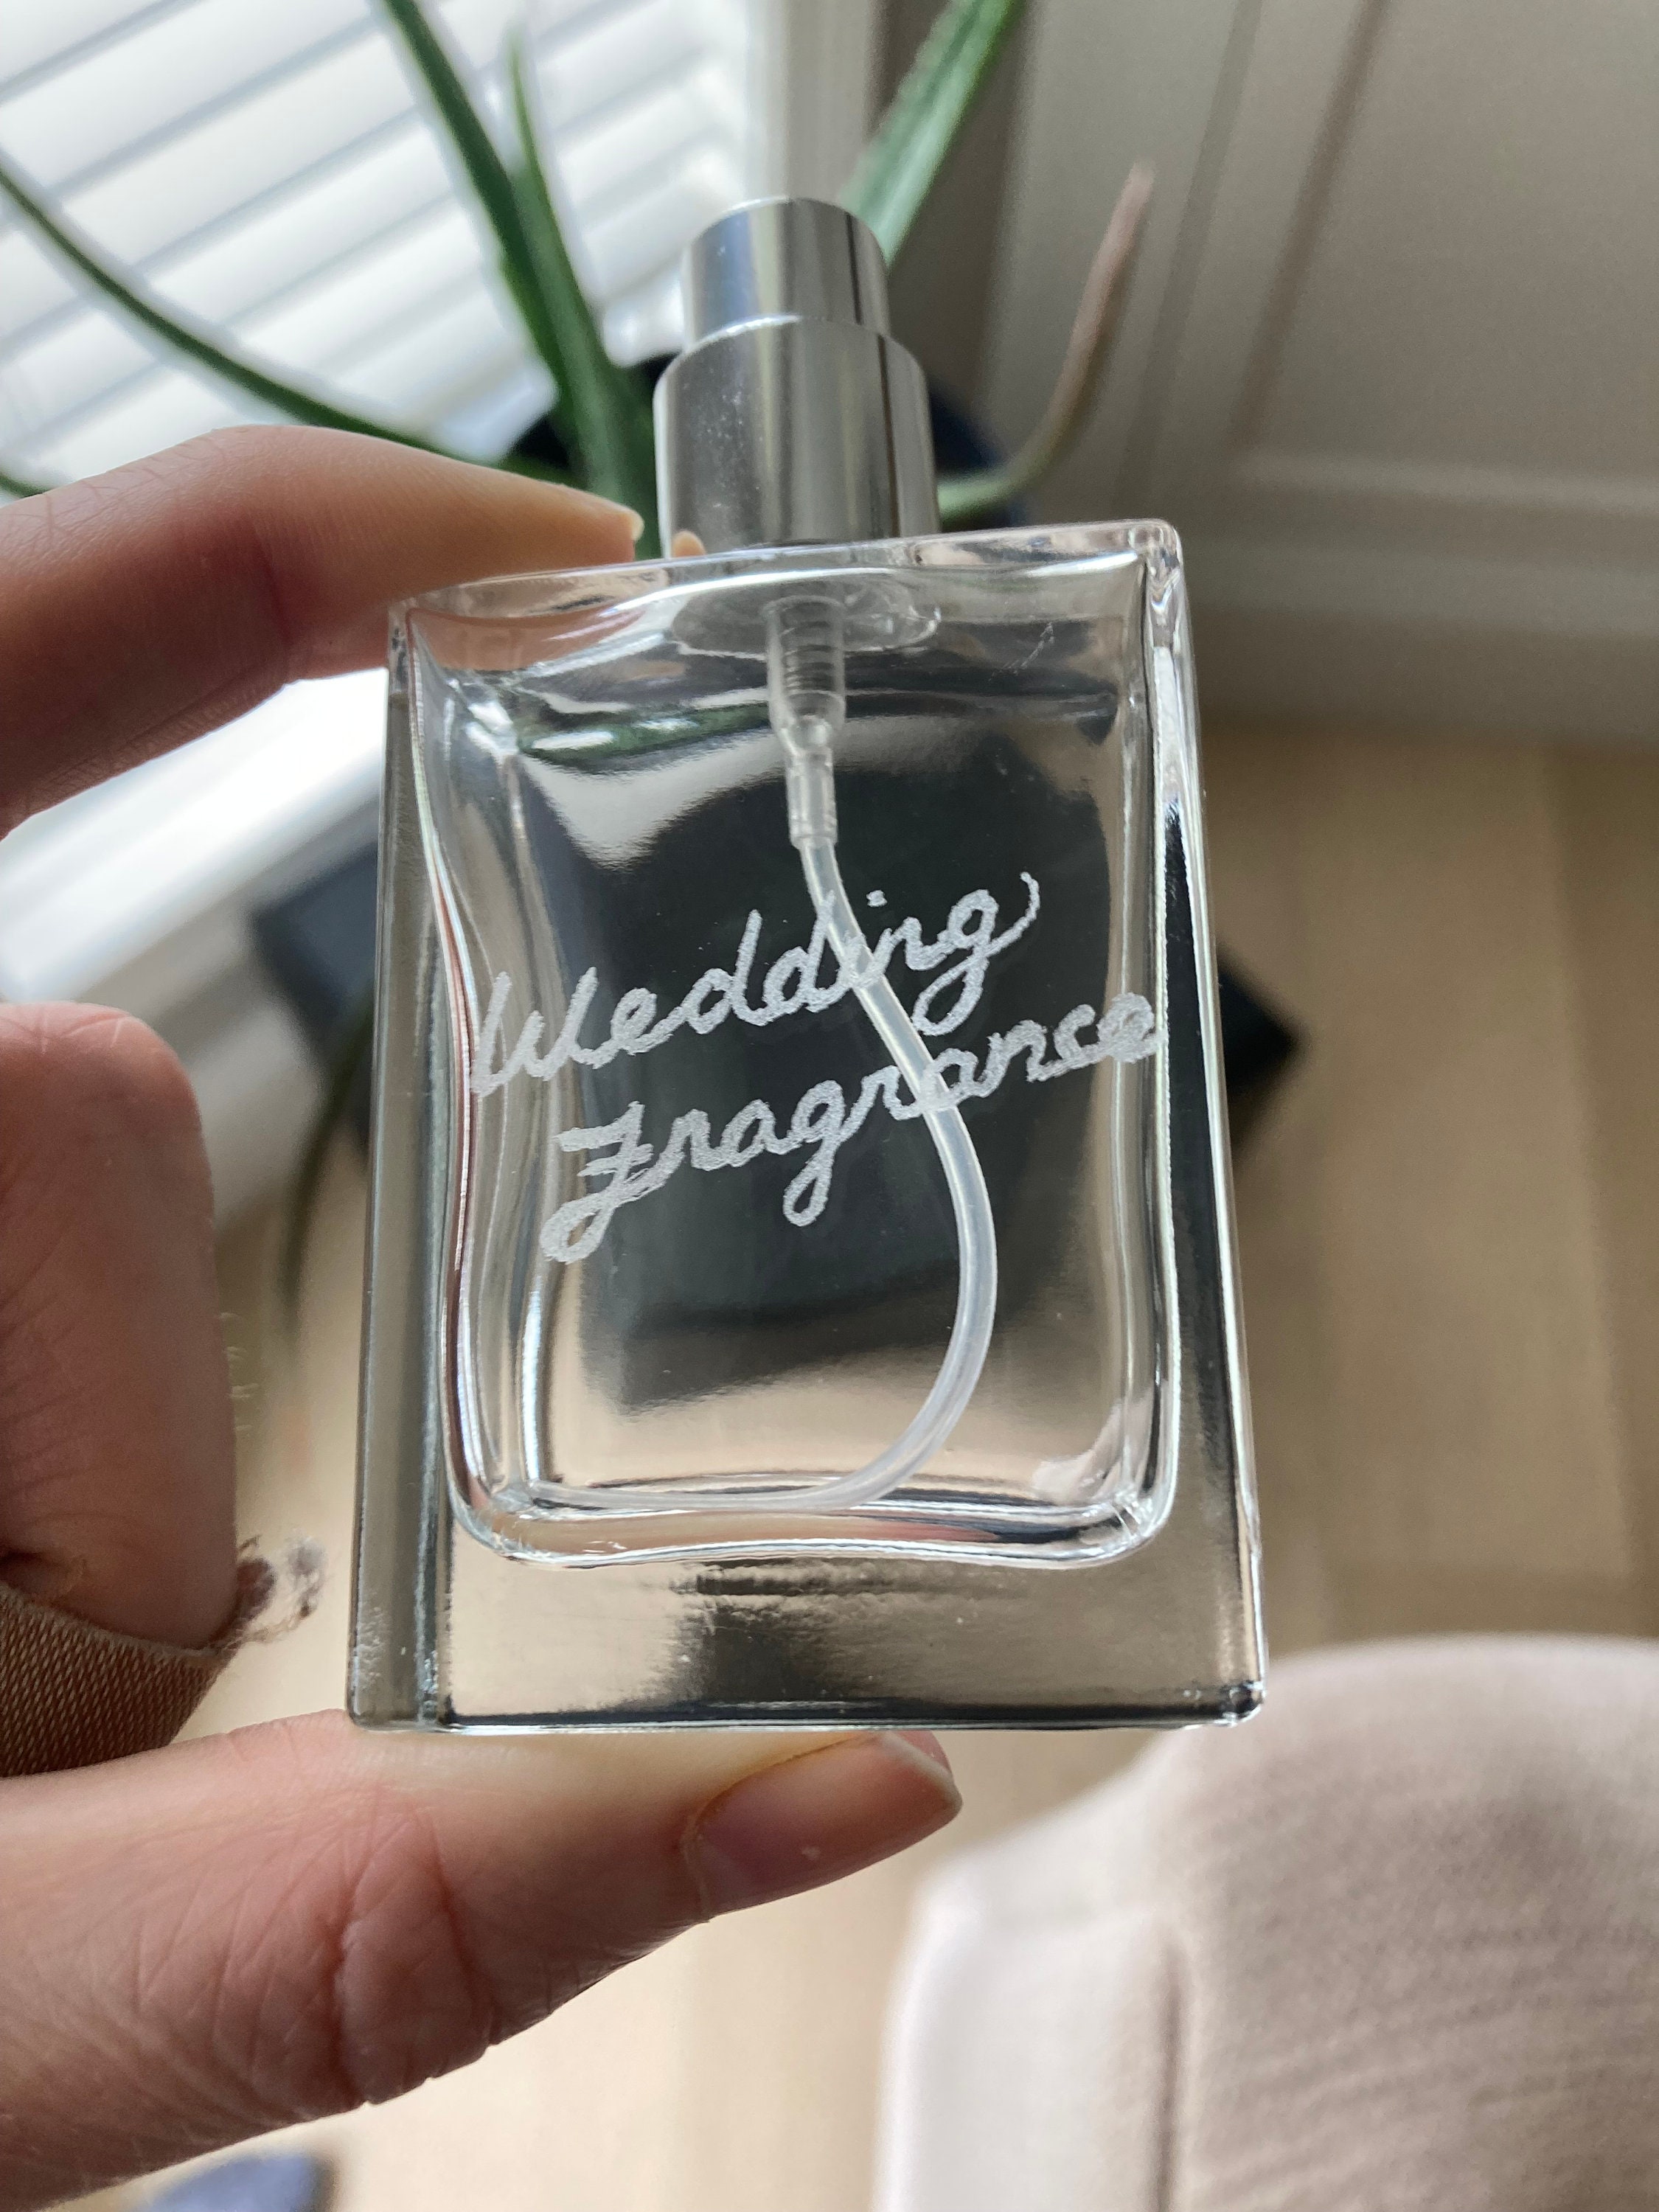 Perfume & Fragrance Bottle EngravIng – A Wincy Glass N Design